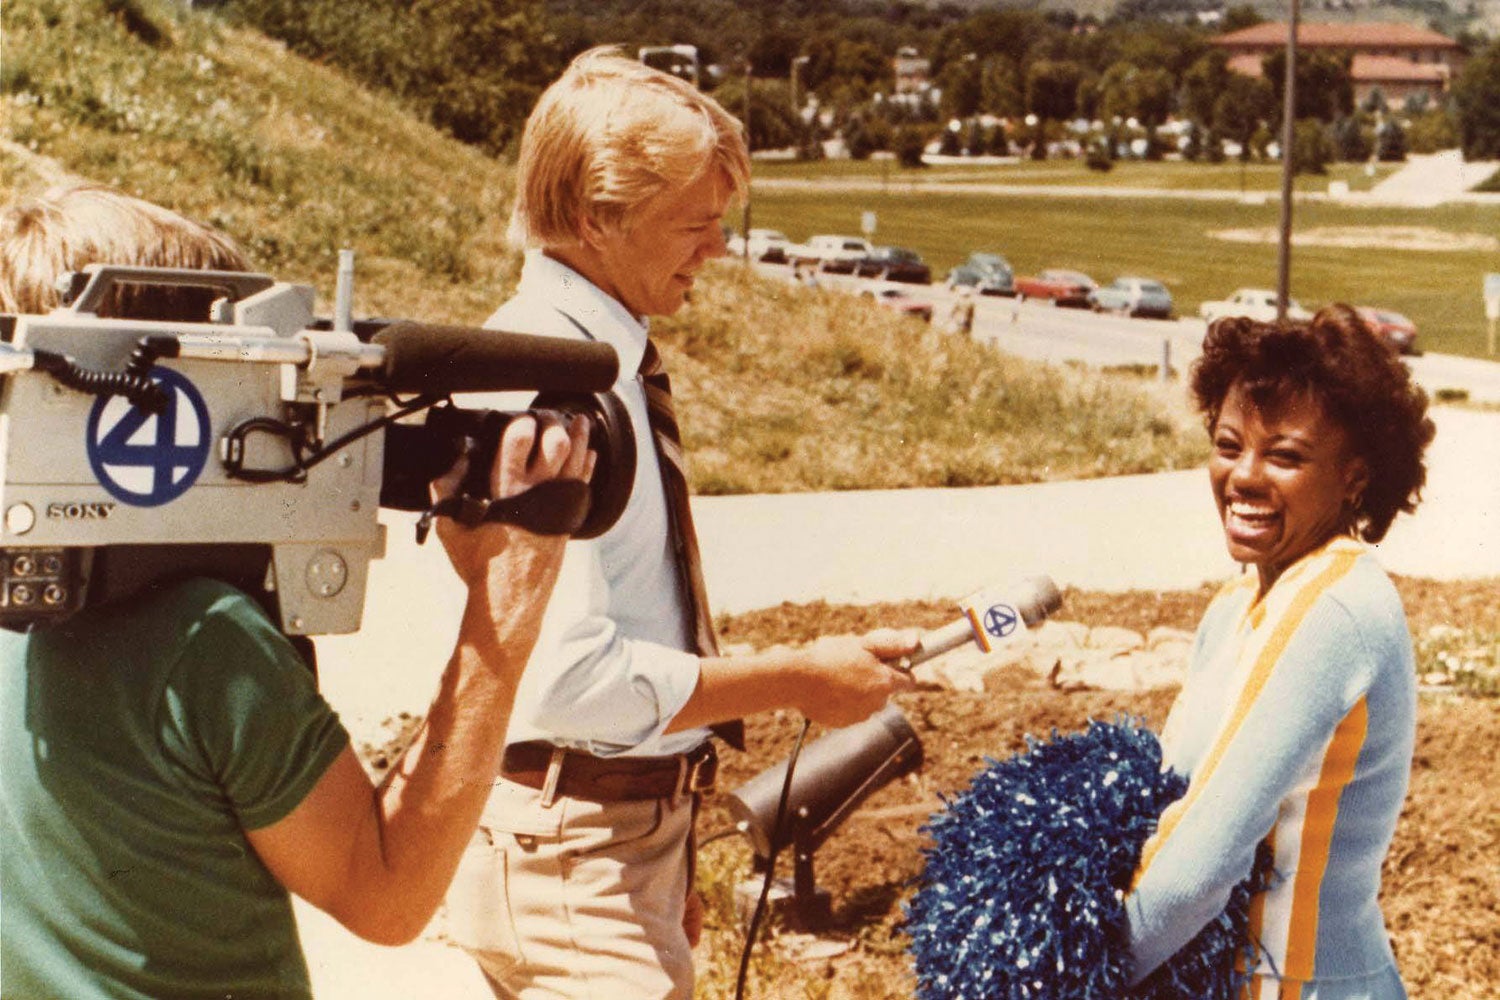 Cheerleader Lorna Tate being interviewed